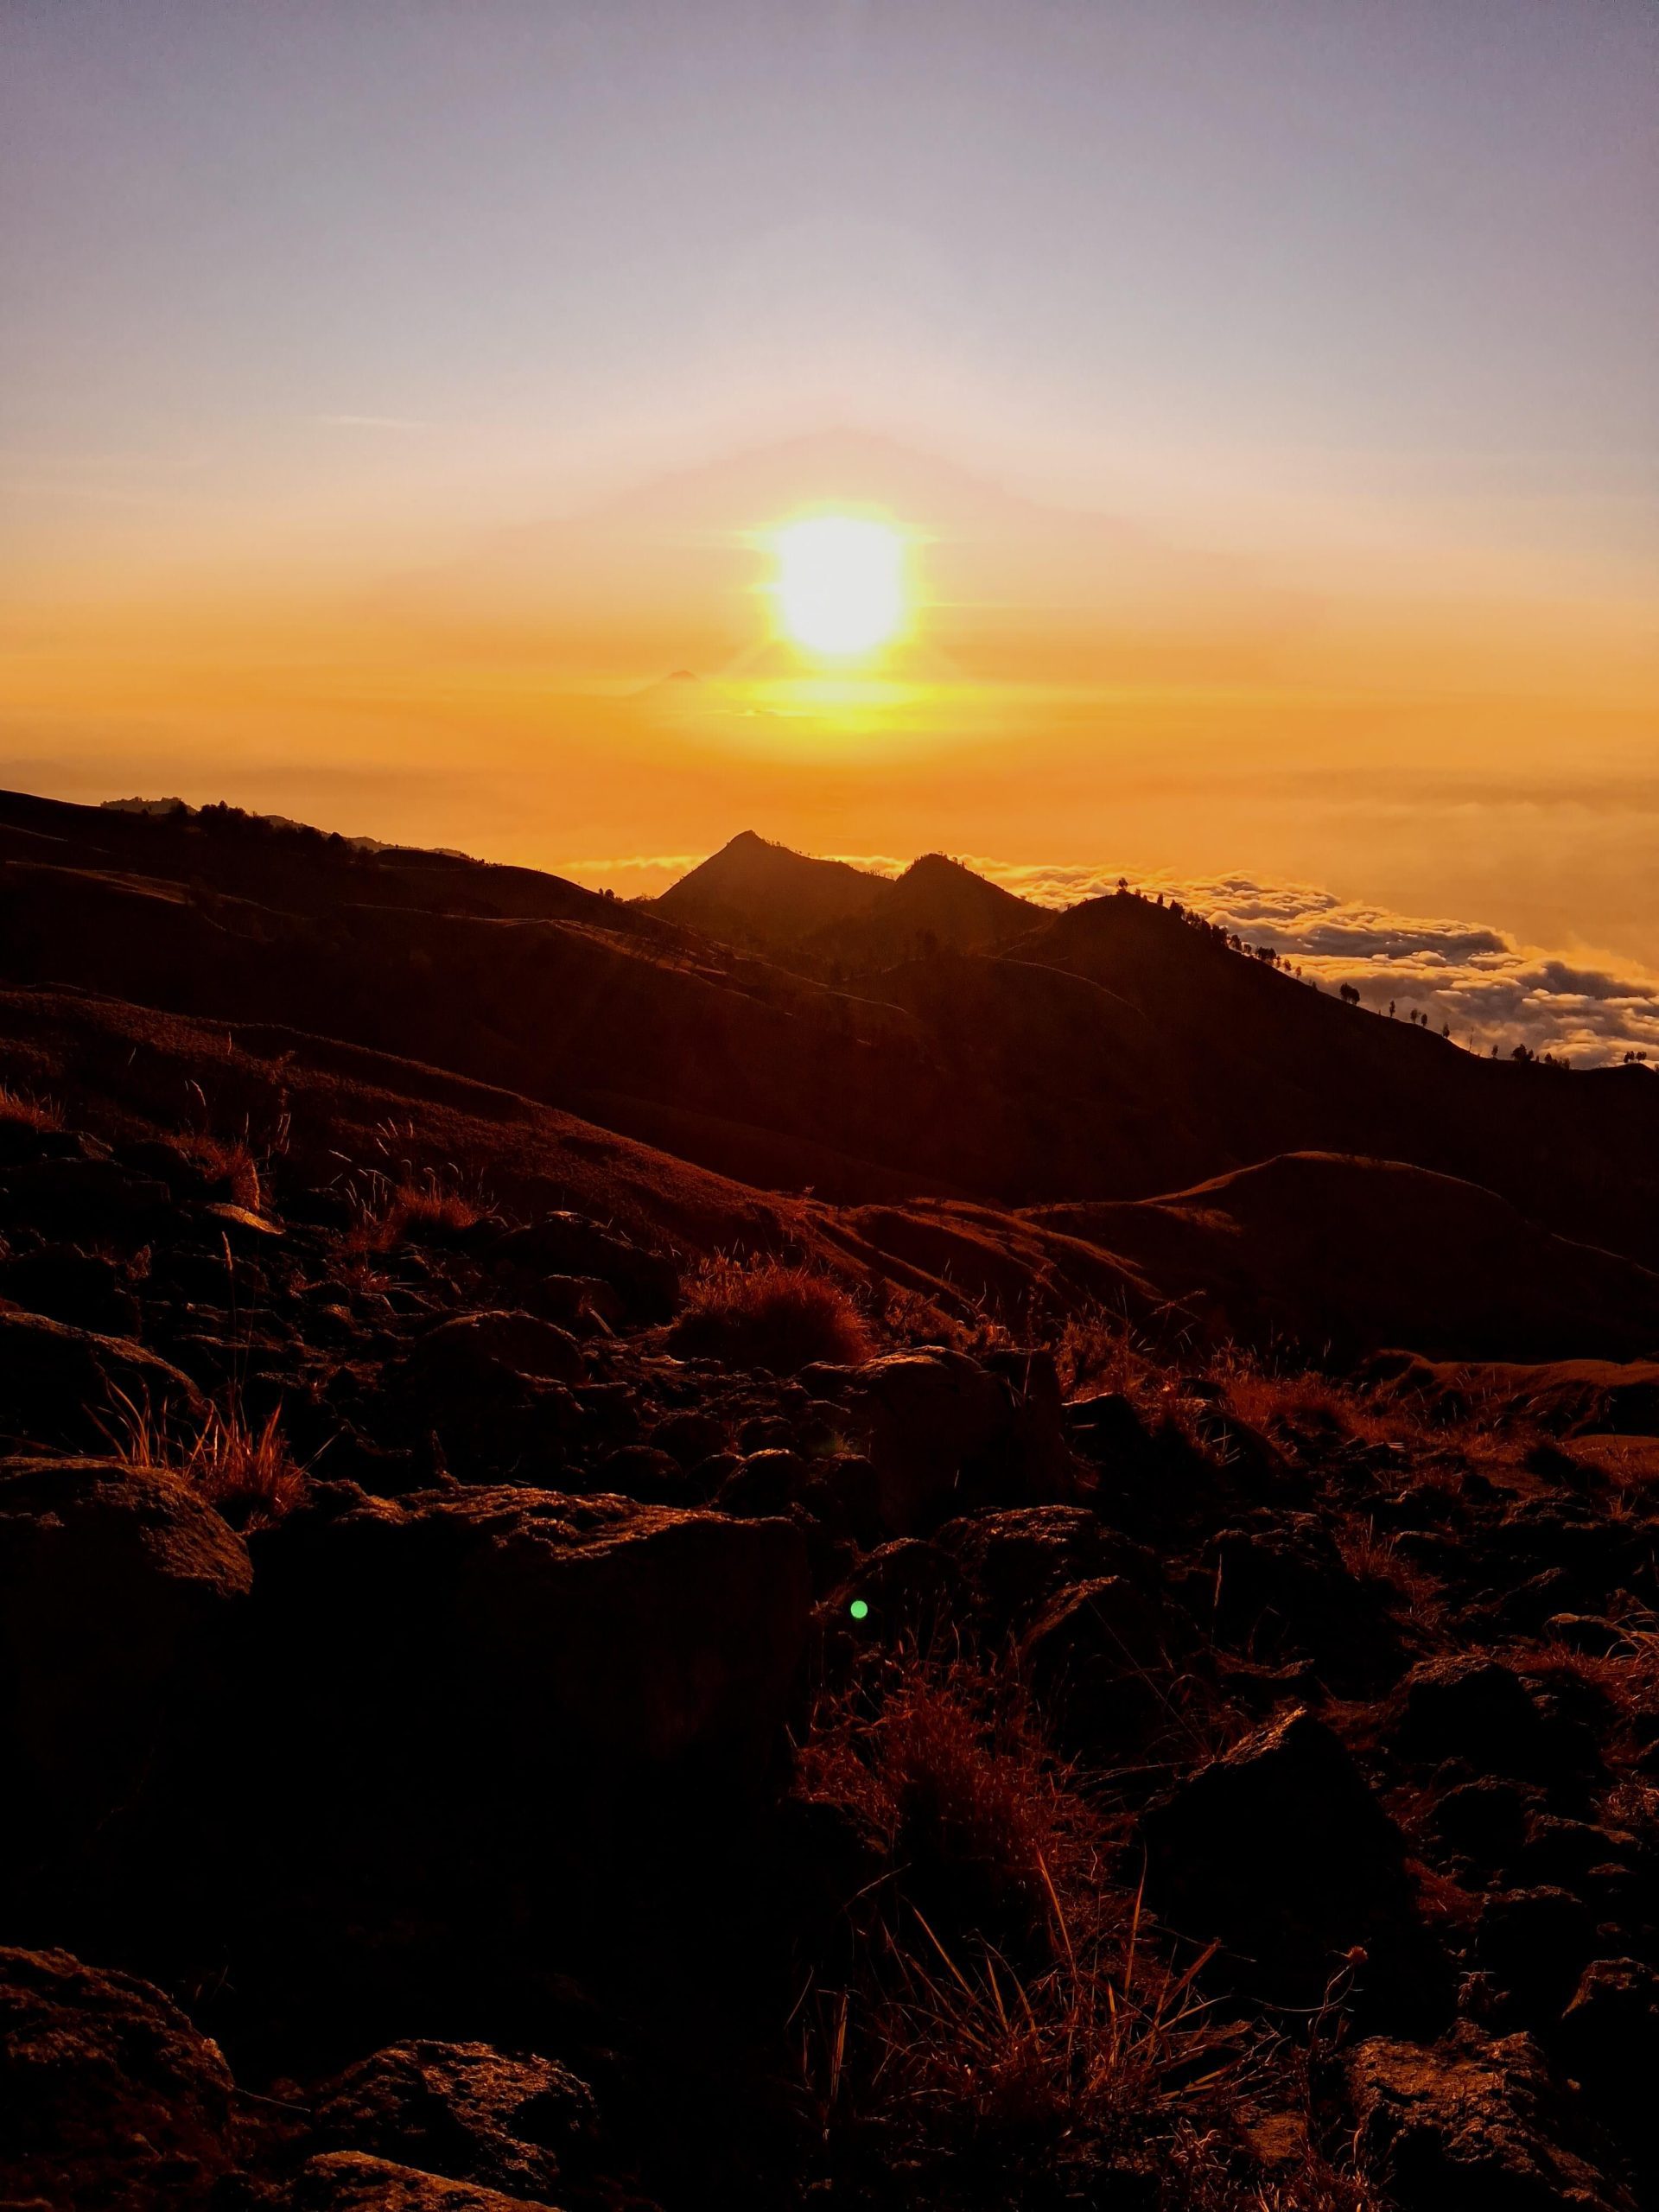 Mount rinjani 2 day sunset view